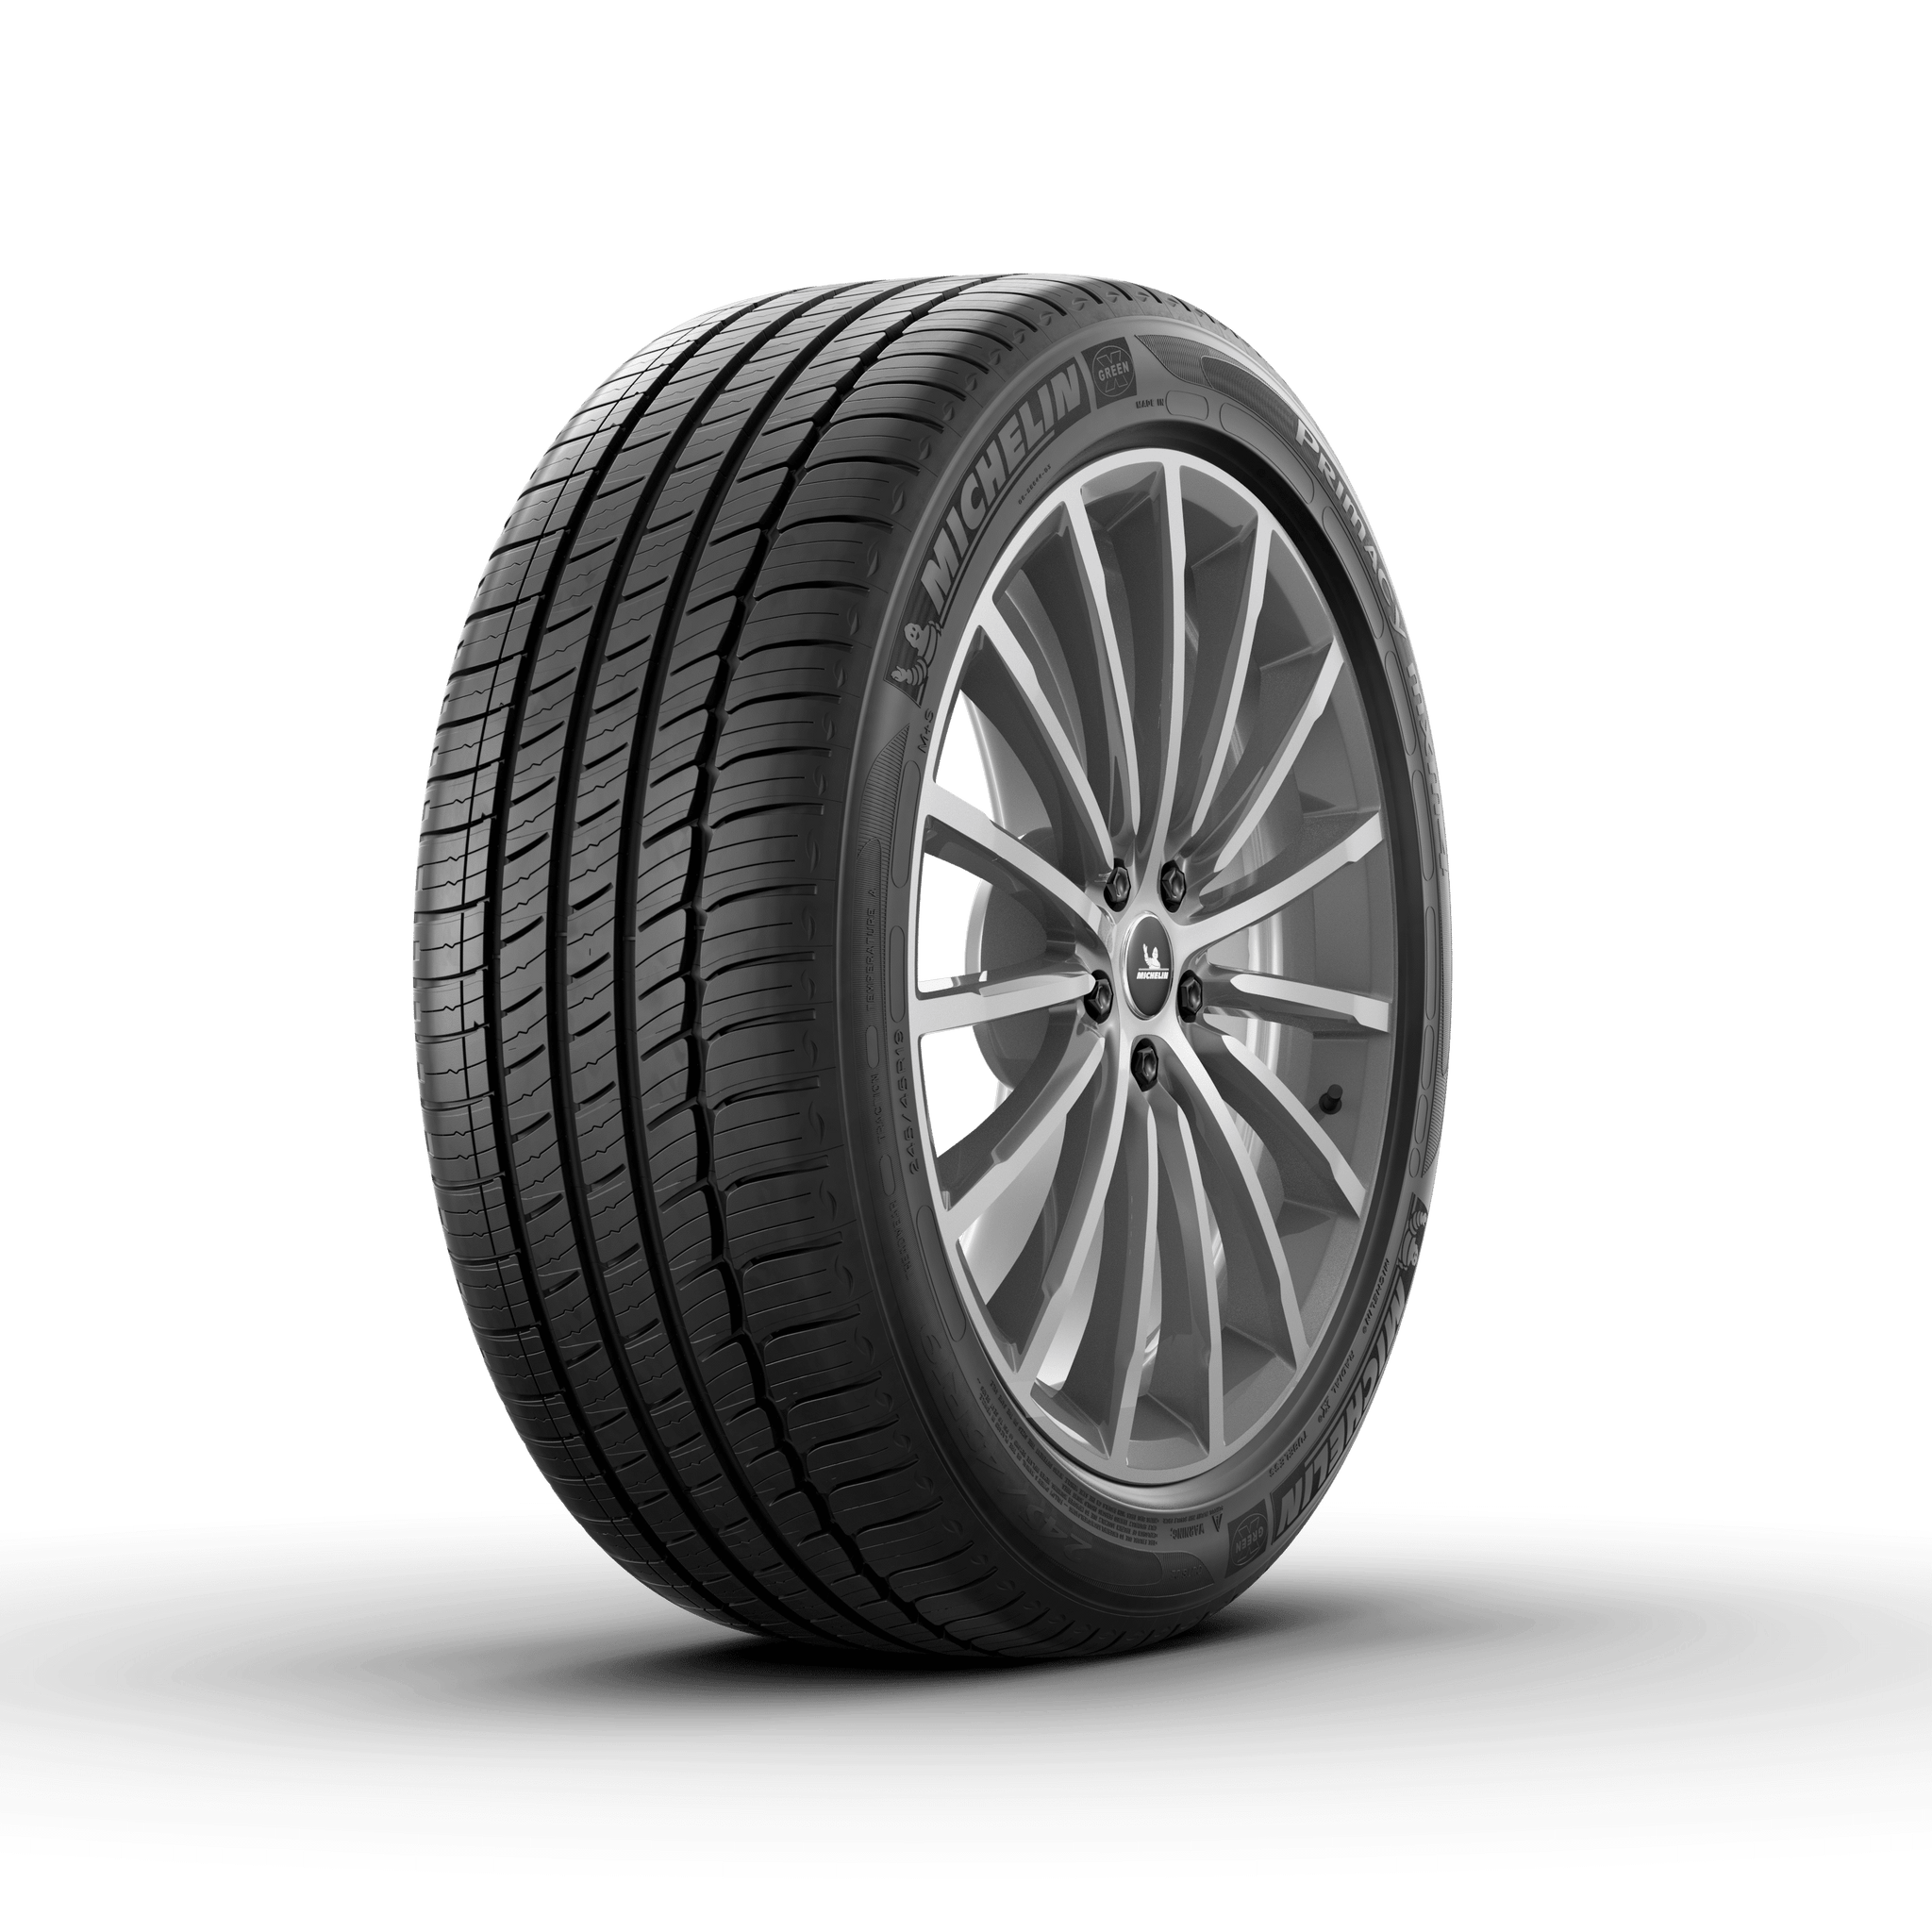 MICHELIN PRIMACY MXM4 235/55R18 (28.2X9.3R 18) Tires